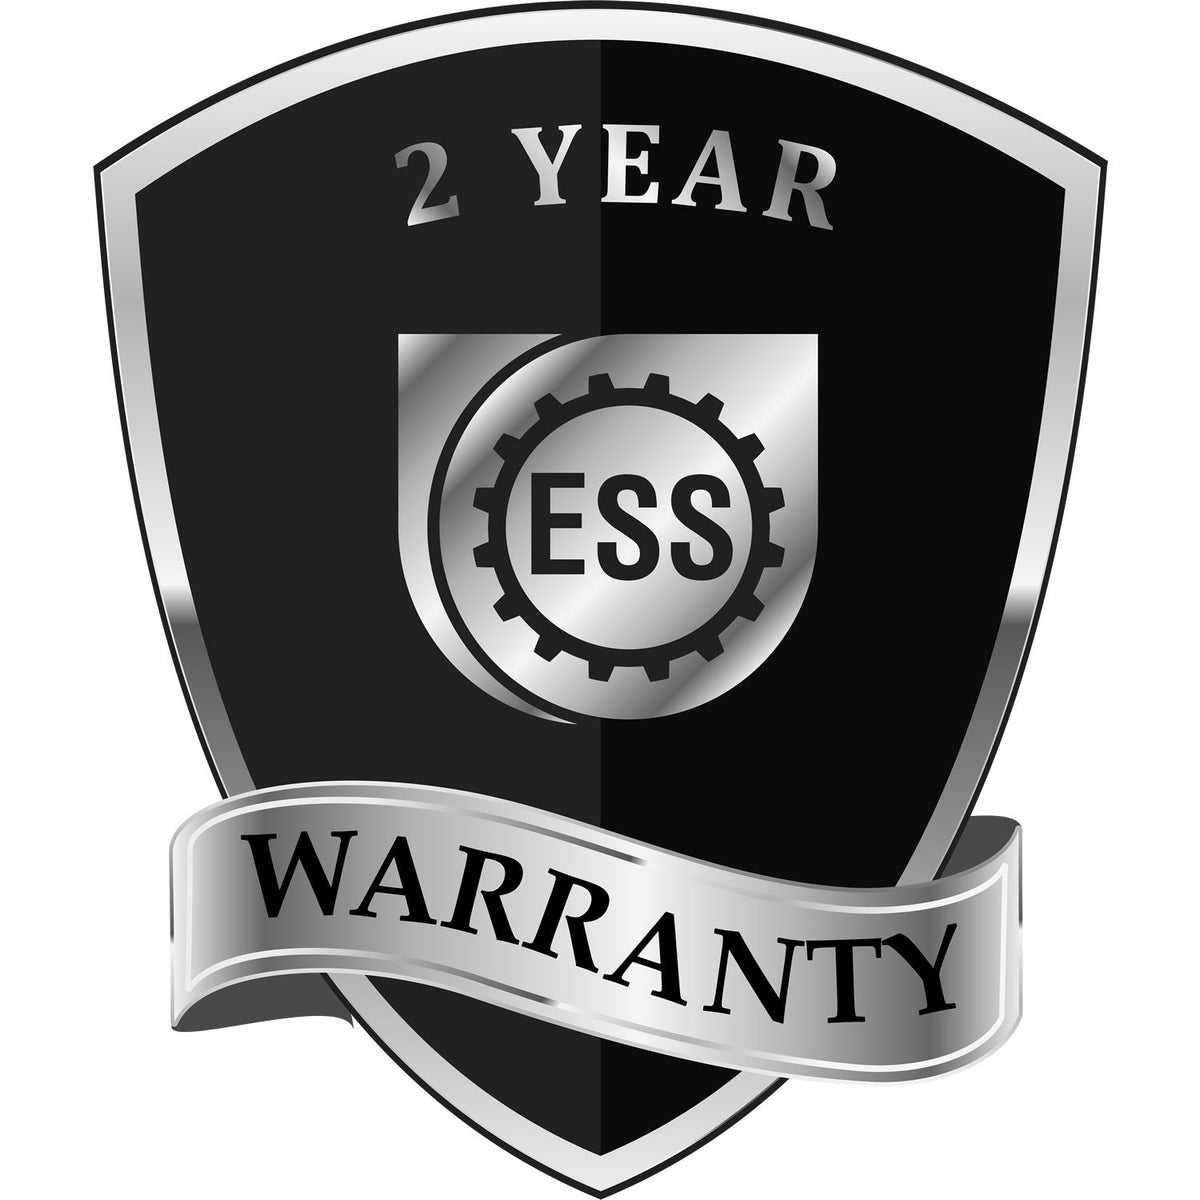 A black and silver badge or emblem showing warranty information for the Gift Nebraska Geologist Seal